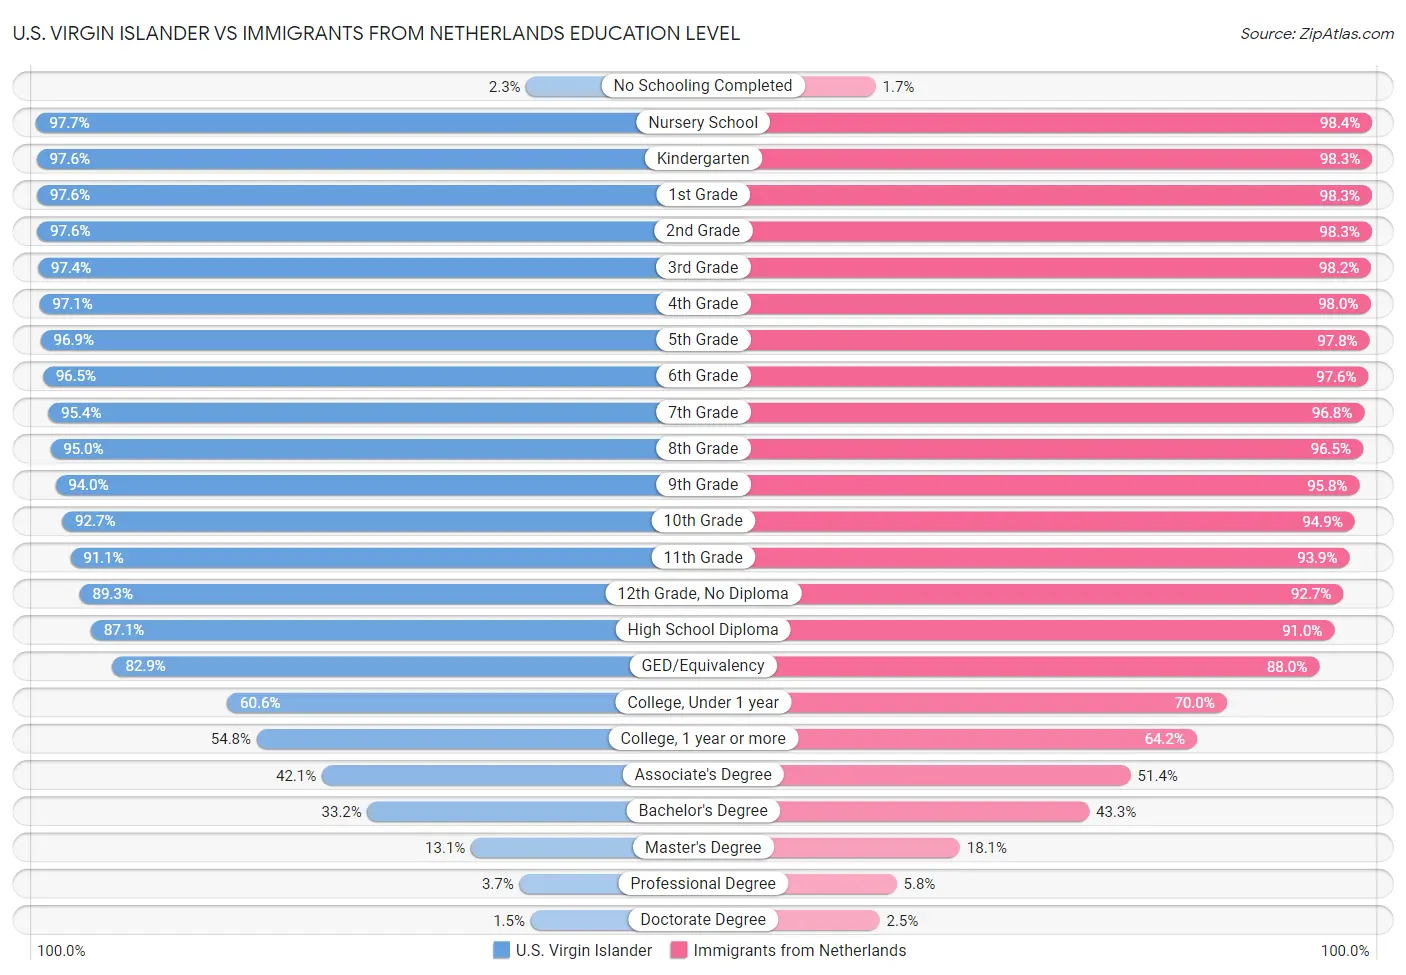 U.S. Virgin Islander vs Immigrants from Netherlands Education Level